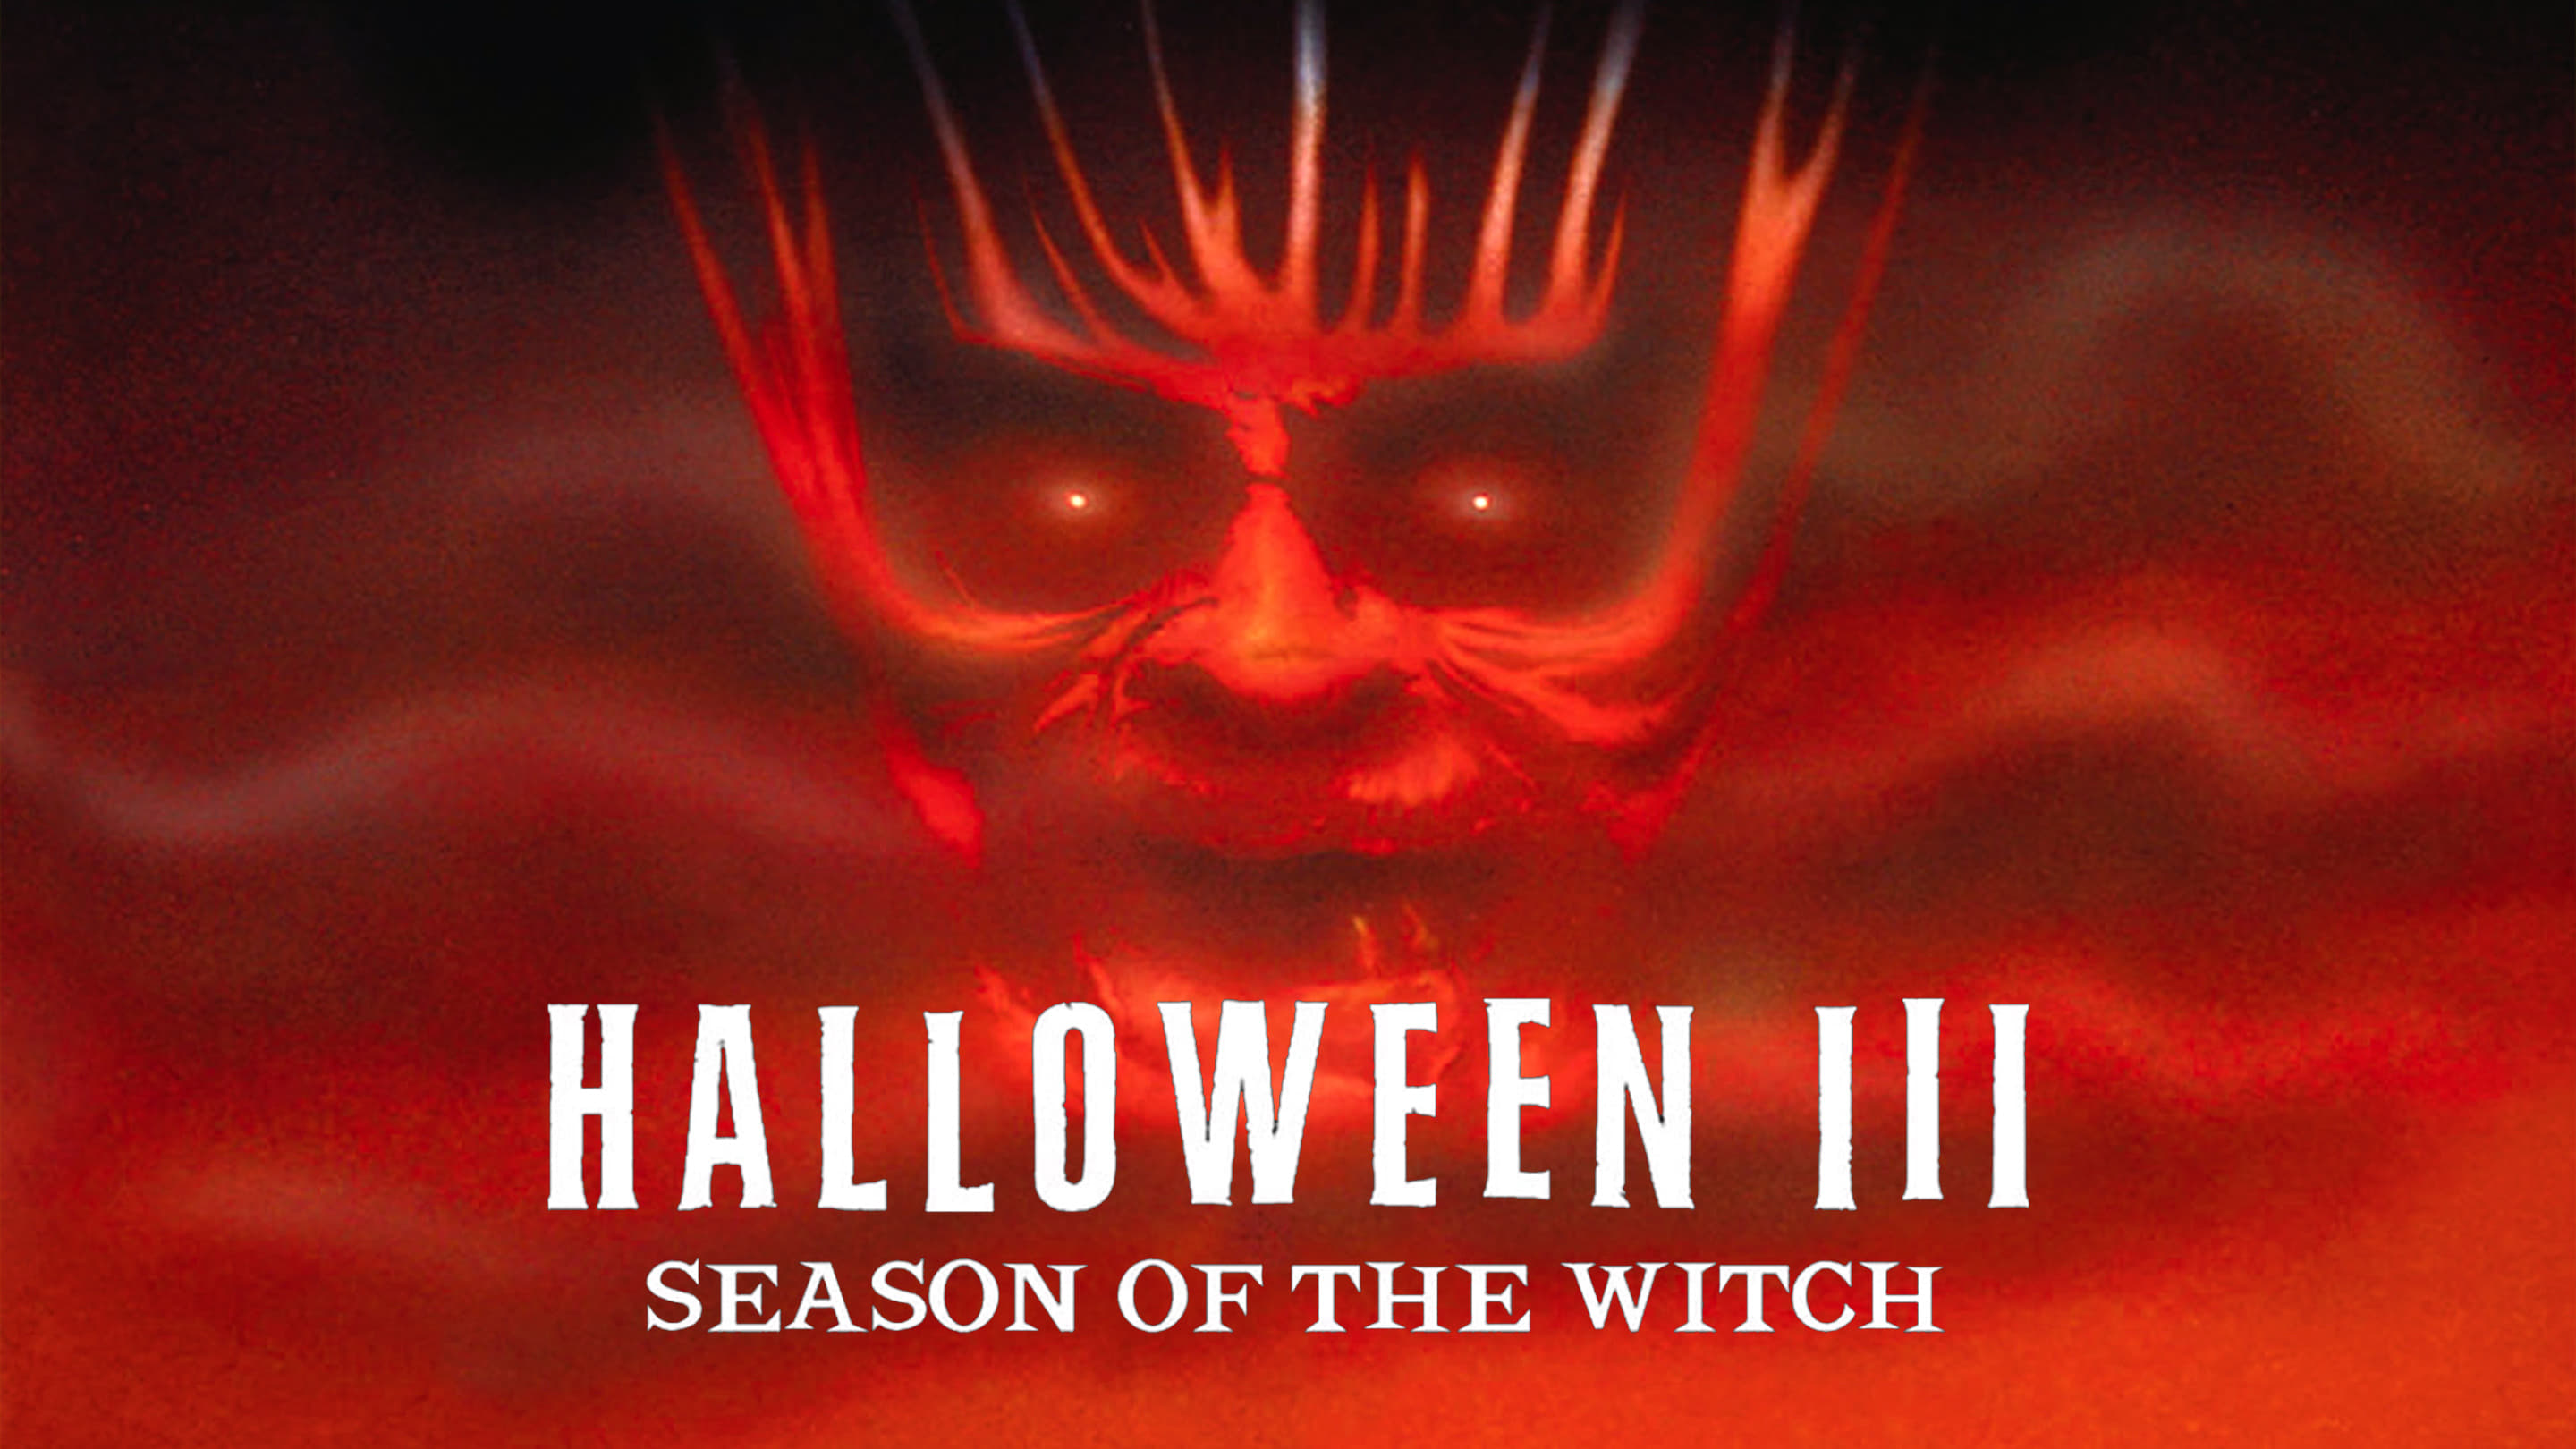 Halloween 3 : Le Sang du sorcier